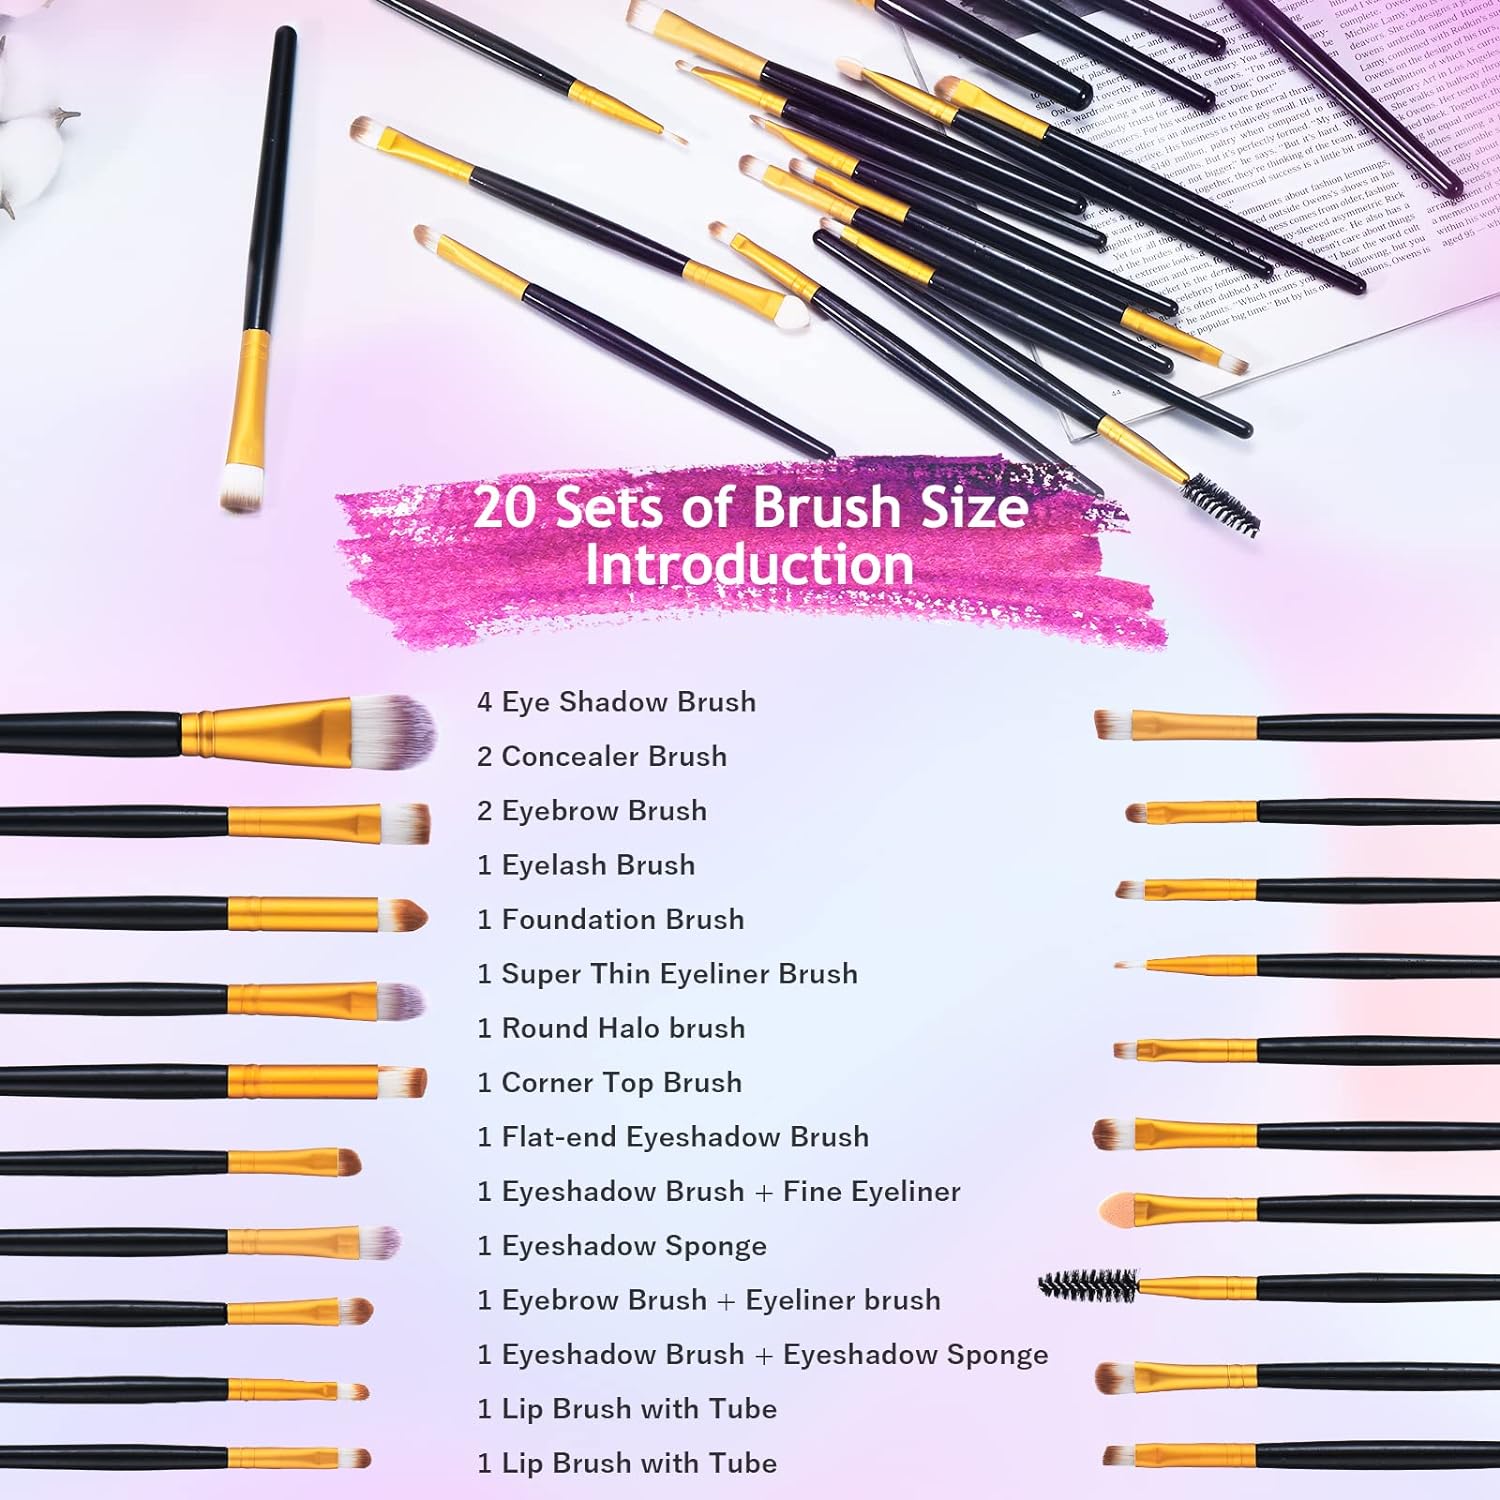 All in One Makeup Kit for Women Full Kit - 177 Color Combination Makeup Set Palette -119 Eyeshadow, 35 Lipstick, 3 Blusher, 6 Powder,14 Concealer, 10 Applicators, 1 Mirror, 20 Brushes Set, Make Up Gift Kits for Women Teen Girl